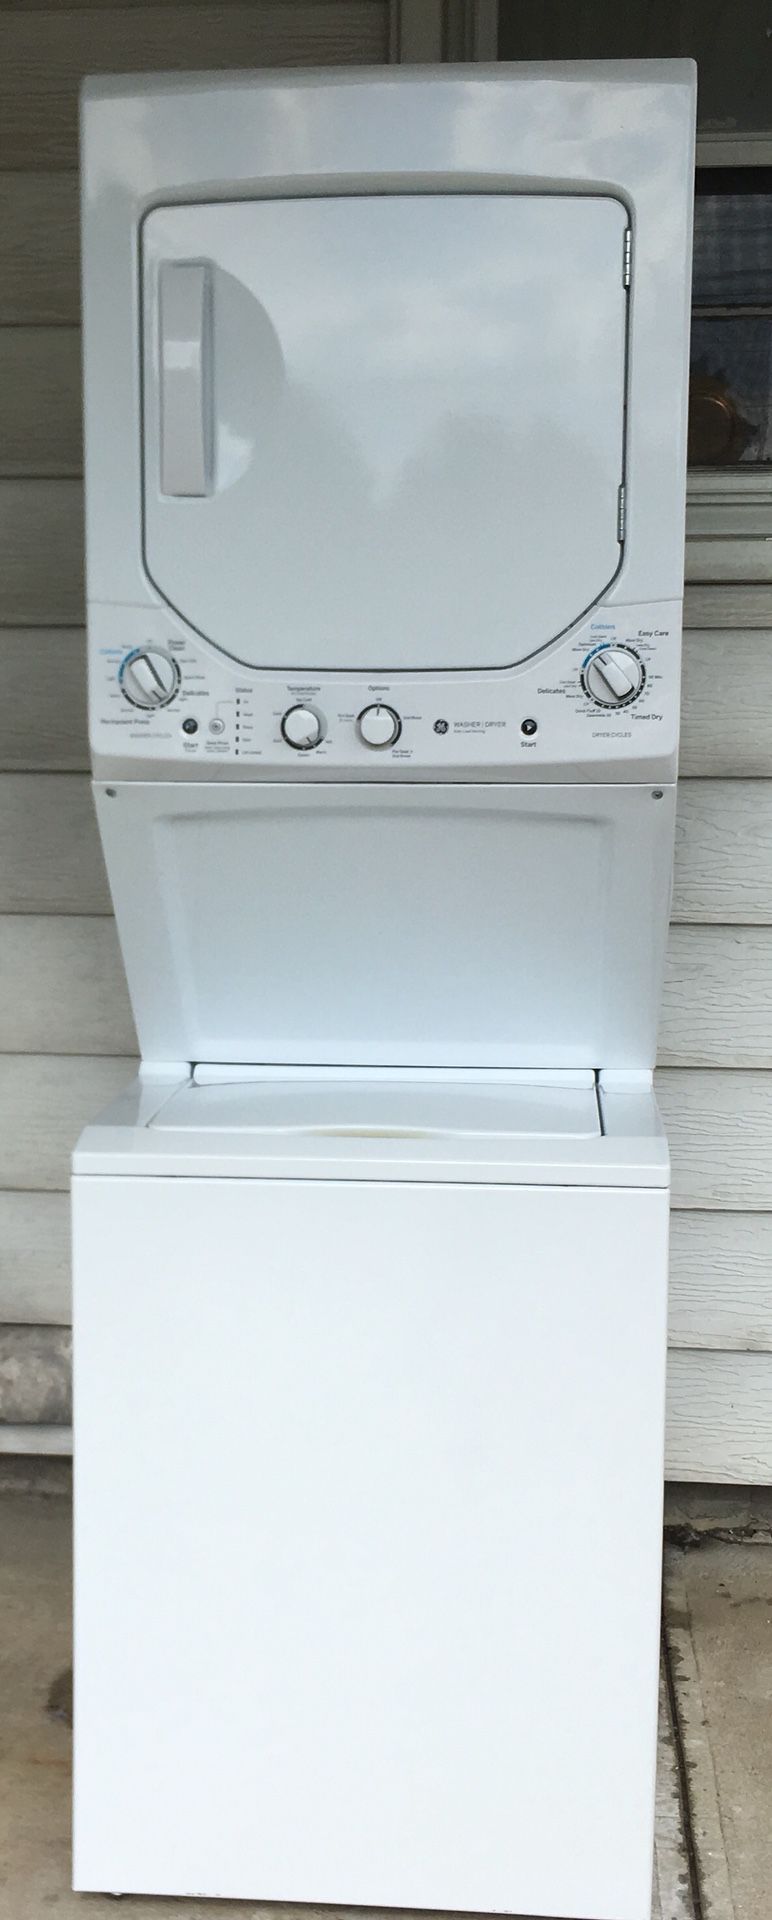 G&E Stuckable Washer & Dryer